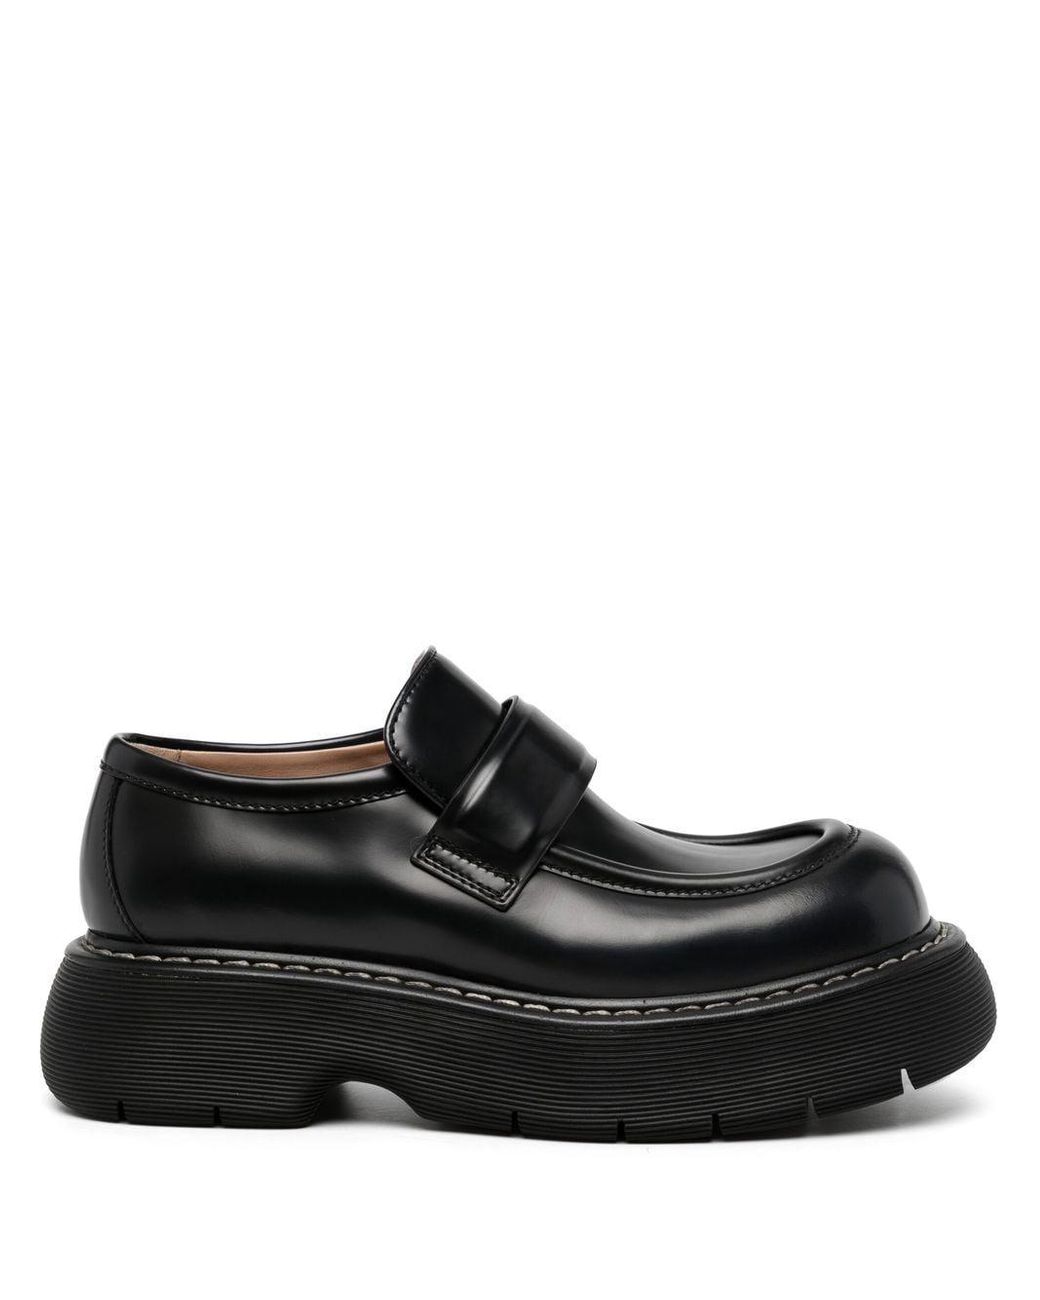 Bottega Veneta Leather Swell 50mm Loafers in Black | Lyst UK